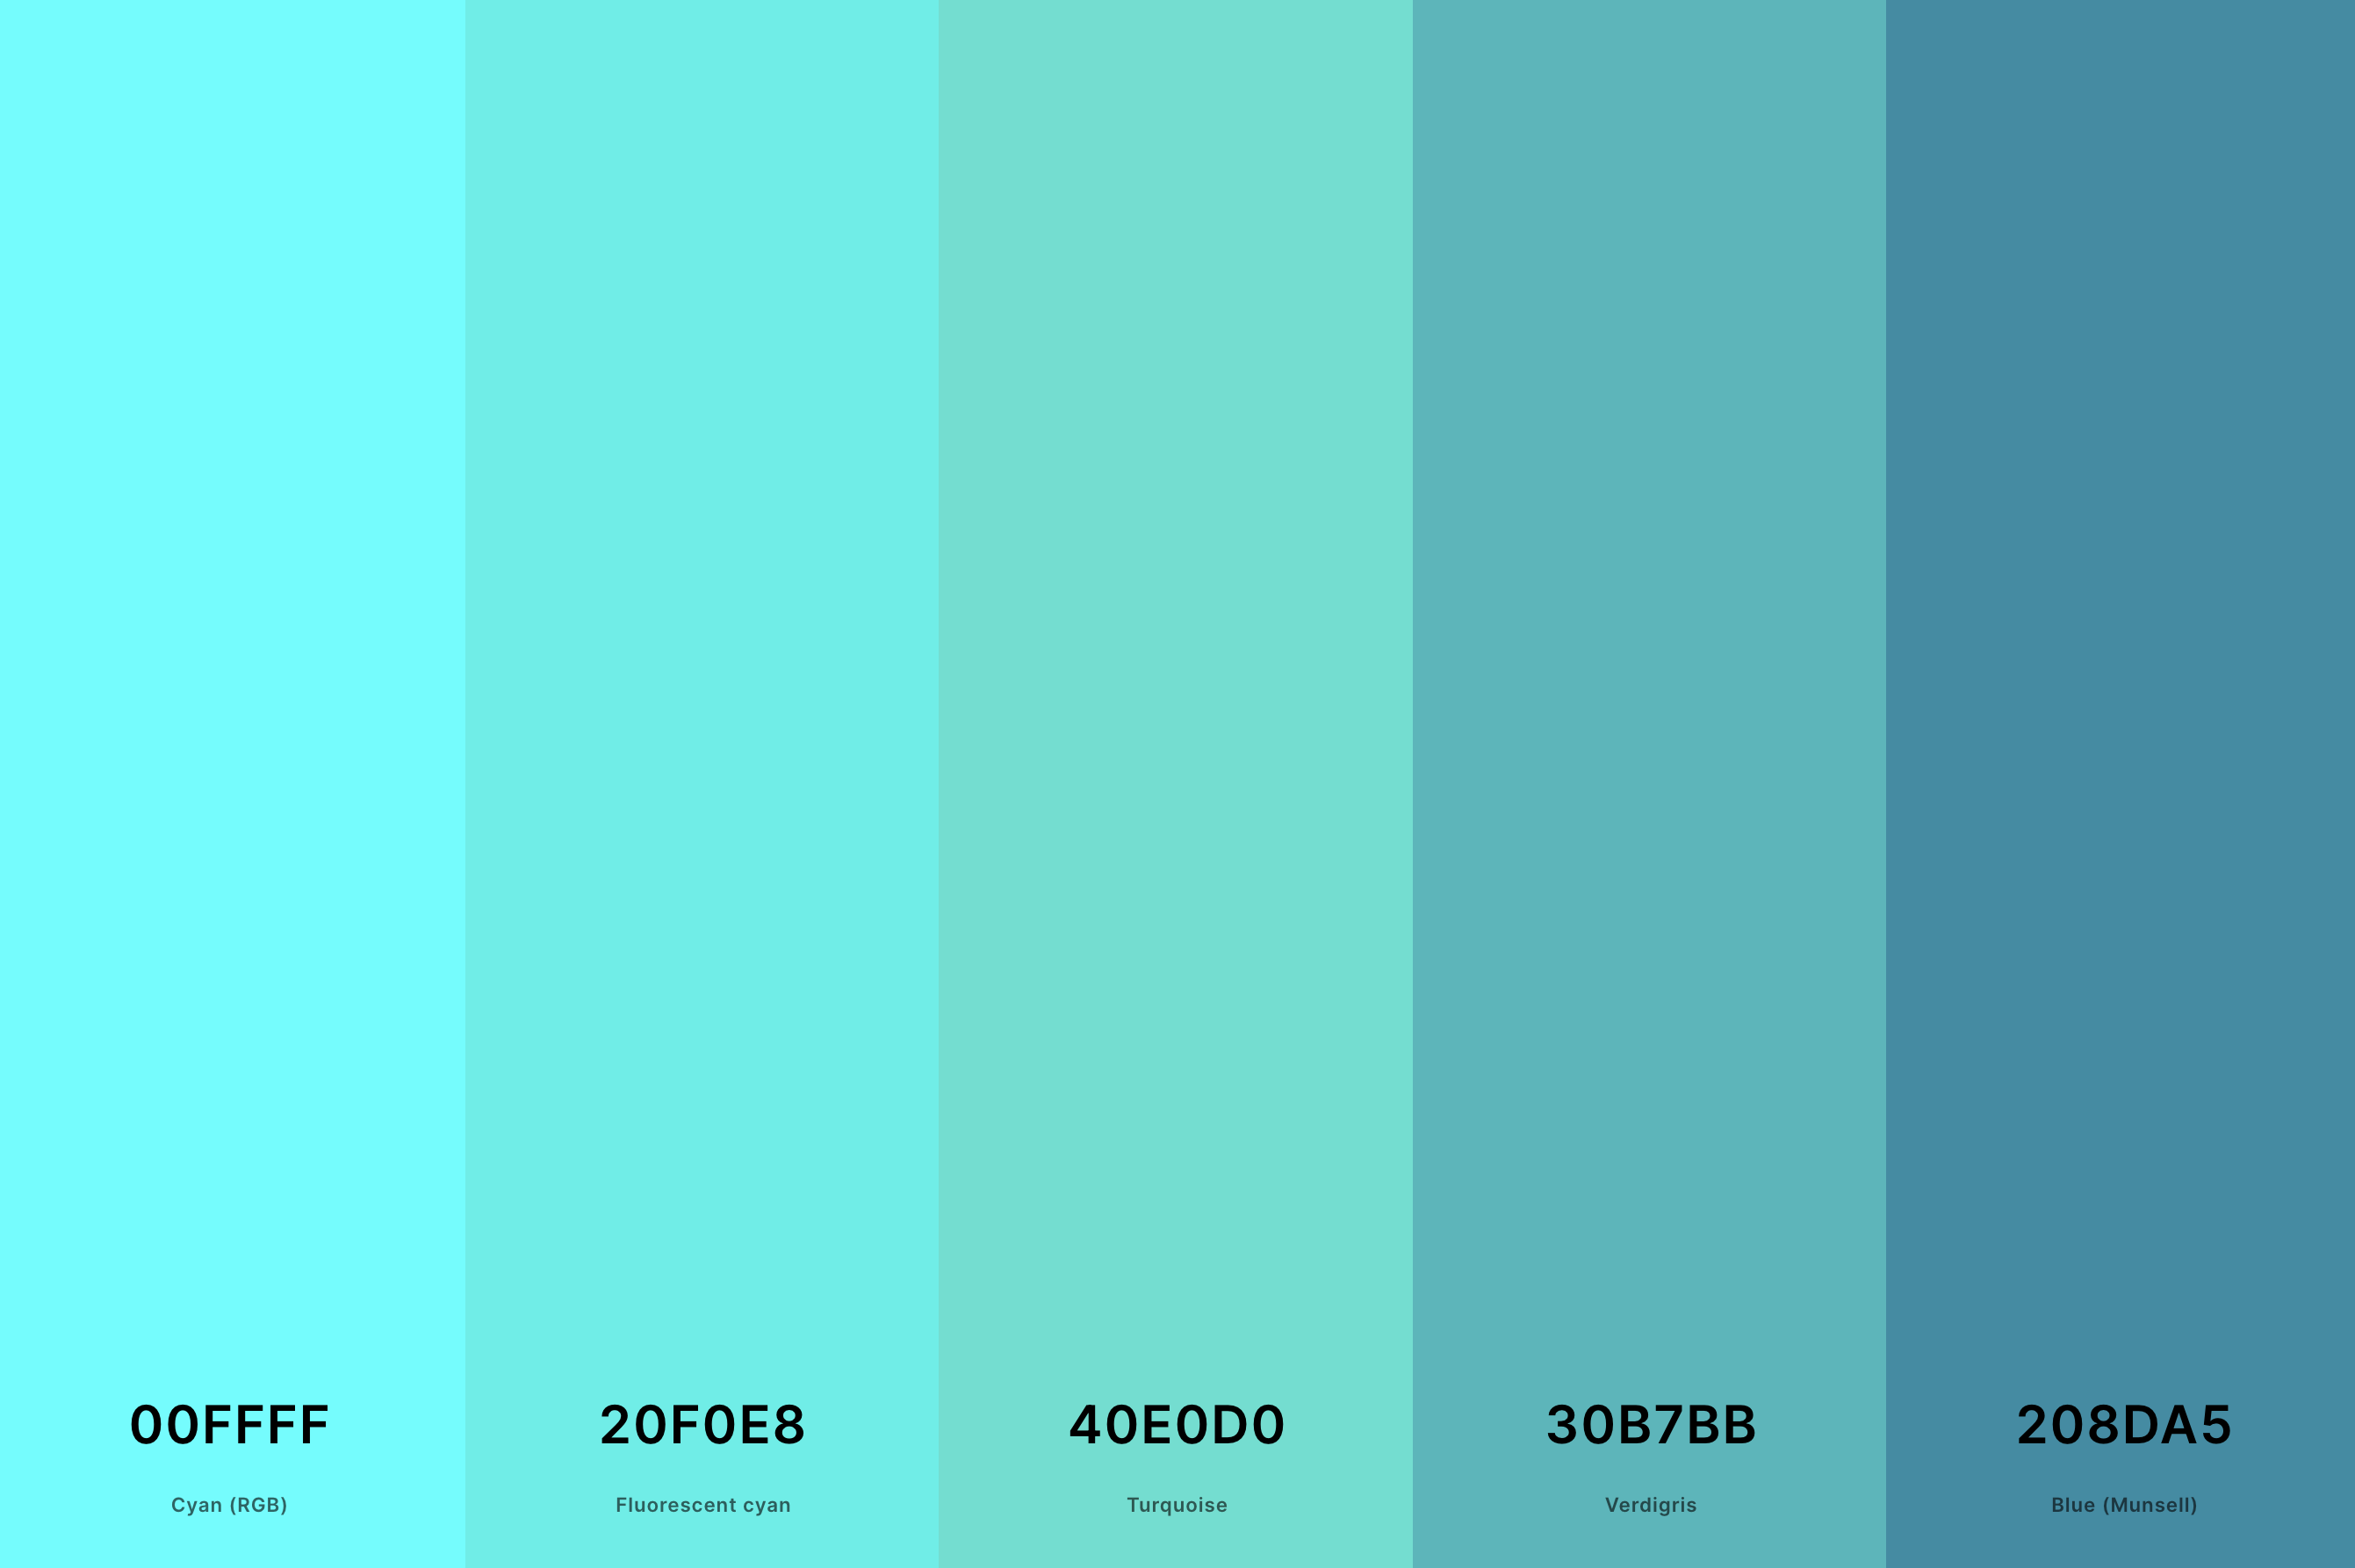 20. Turquoise And Aqua Color Palette Color Palette with Cyan (Rgb) (Hex #00FFFF) + Fluorescent Cyan (Hex #20F0E8) + Turquoise (Hex #40E0D0) + Verdigris (Hex #30B7BB) + Blue (Munsell) (Hex #208DA5) Color Palette with Hex Codes